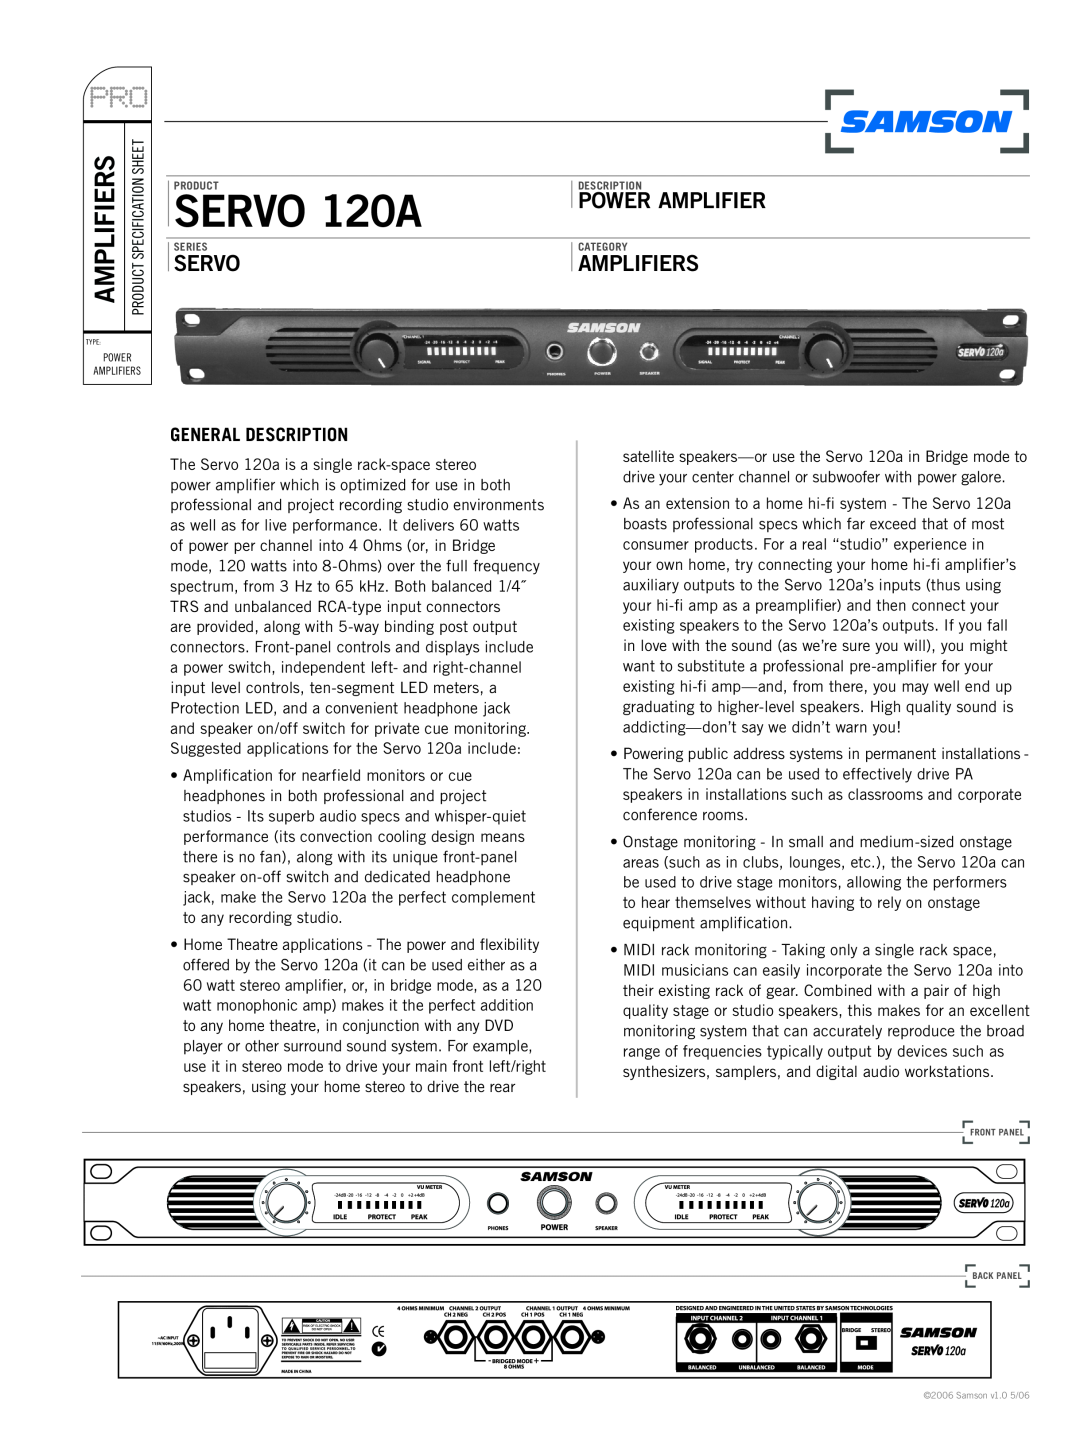 Samson SERVO 120A specifications General Description, Amplifiers, Servo, Power Amplifier 